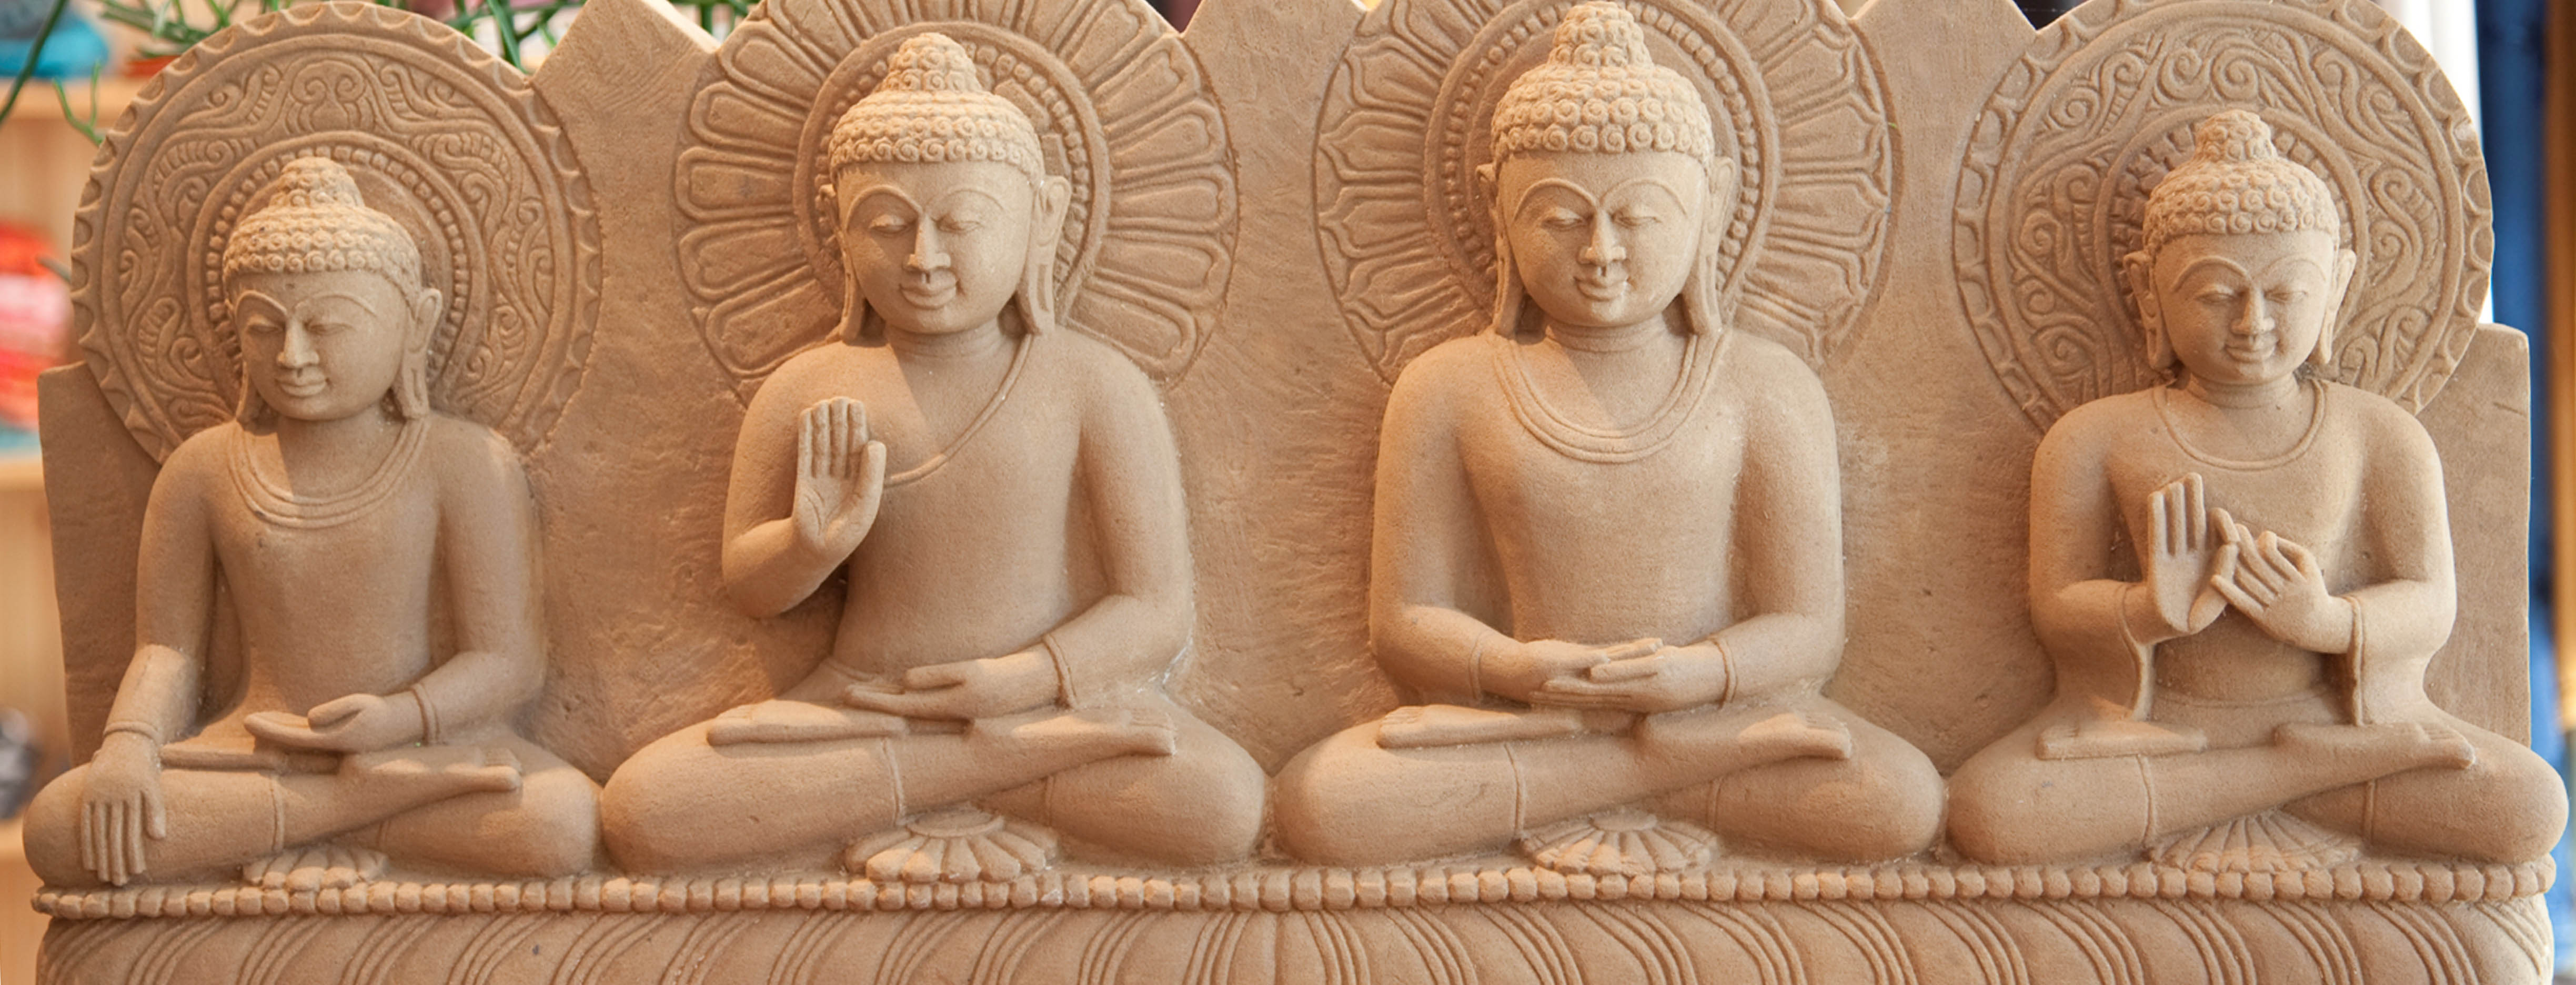 Buddha-Relief-26